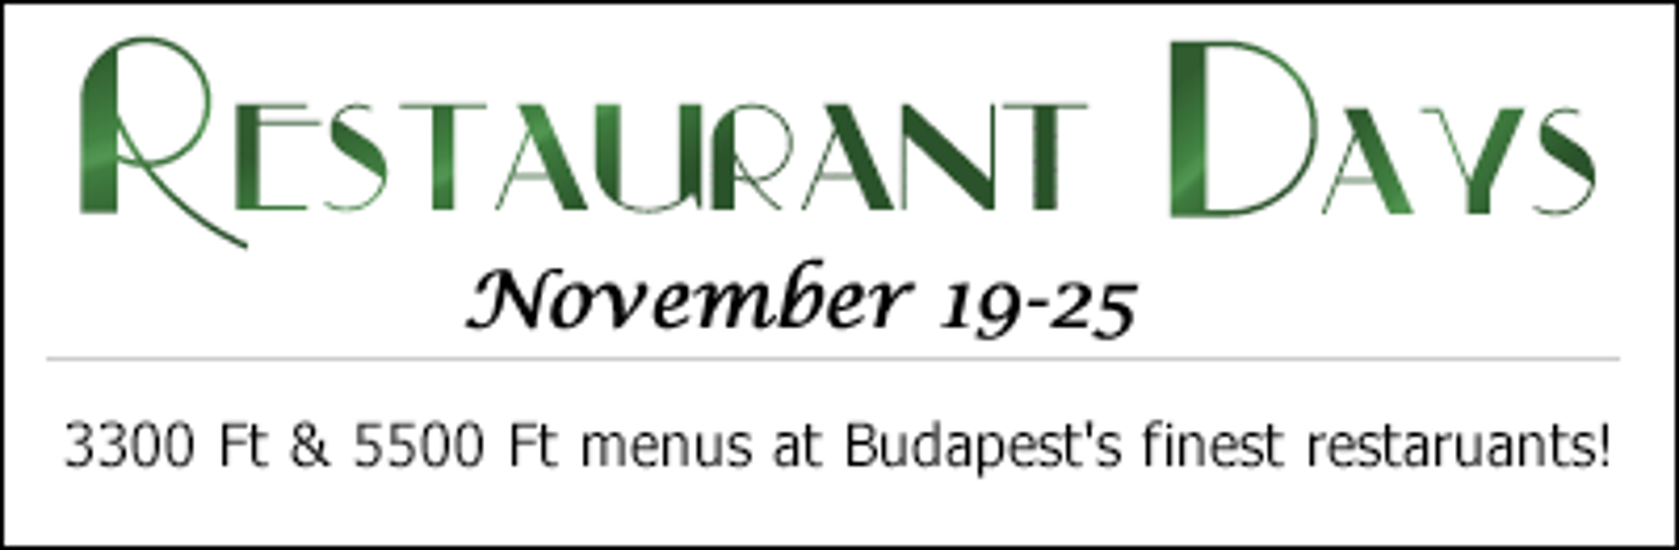 TableFree Restaurant Days Budapest, 19 - 25 November